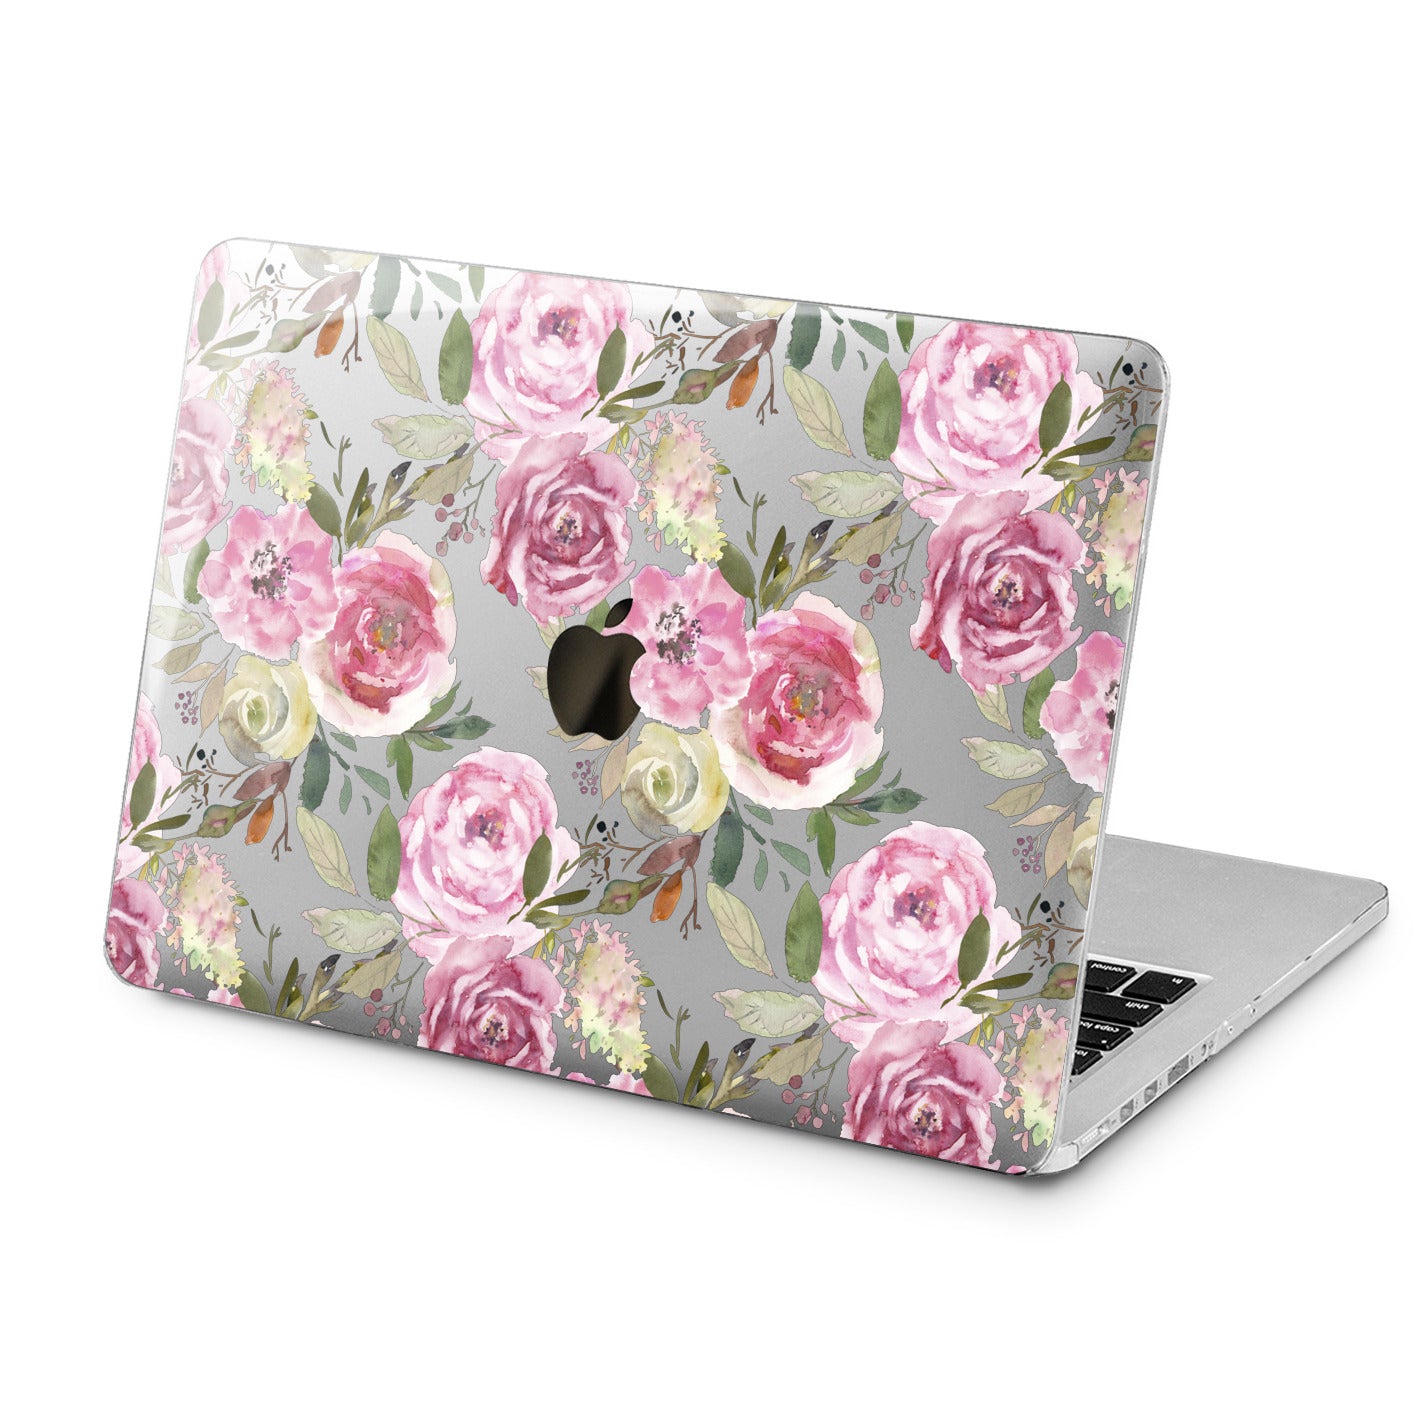 Lex Altern Pink Roses Design Case for your Laptop Apple Macbook.